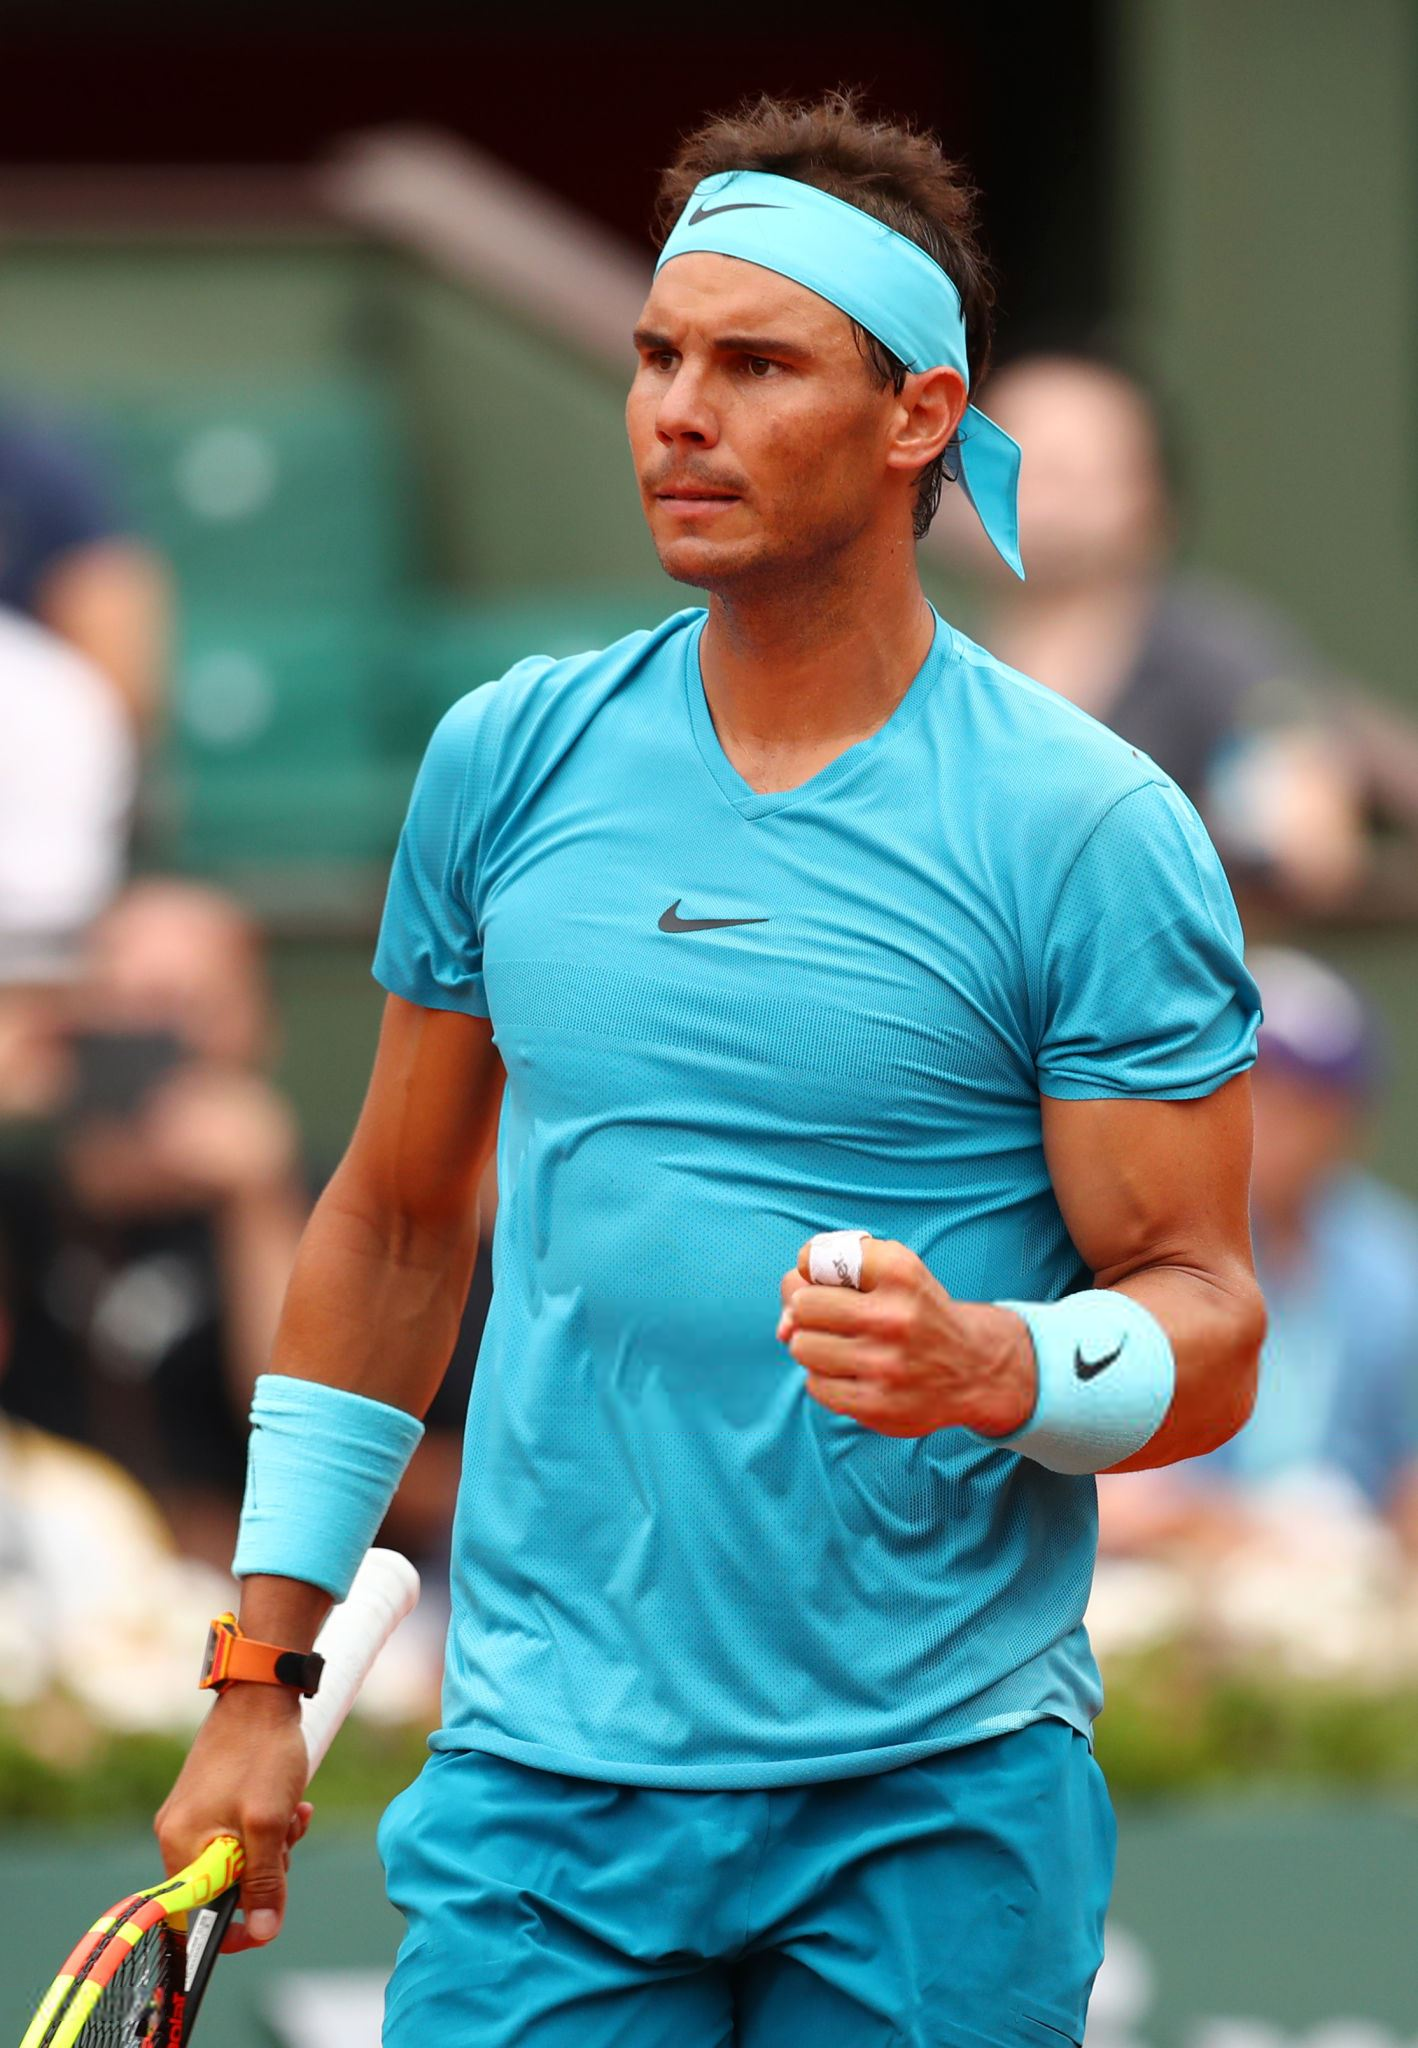 PHOTOS: Rain holds up Rafael Nadal at Roland Garros – Rafael Nadal Fans